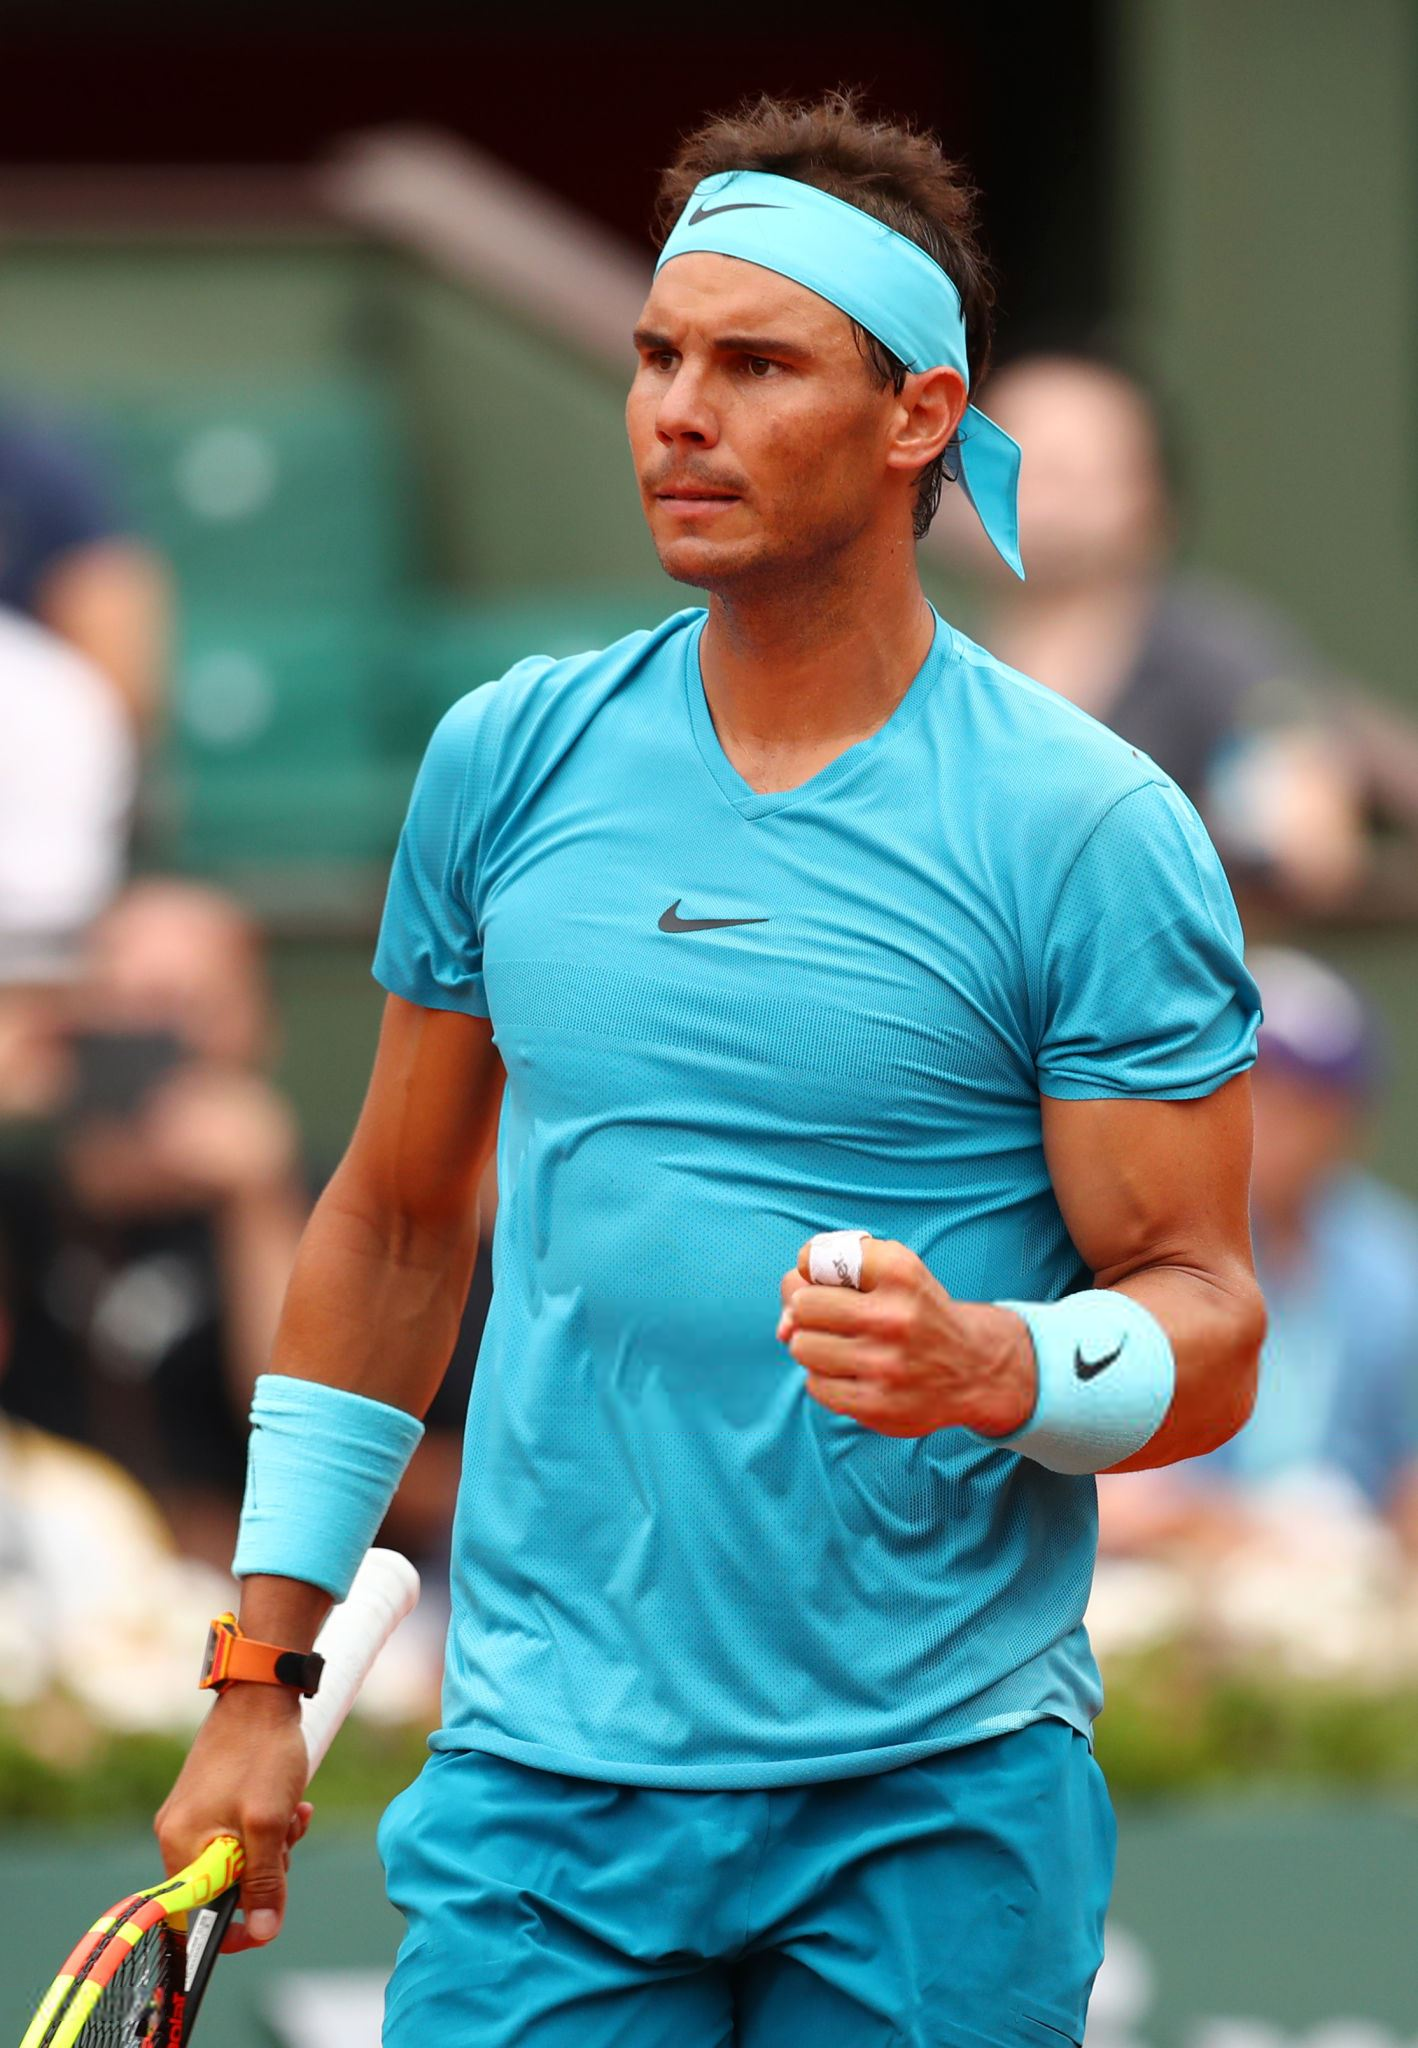 PHOTOS: Rain holds up Rafael Nadal at Roland Garros – Rafael Nadal Fans